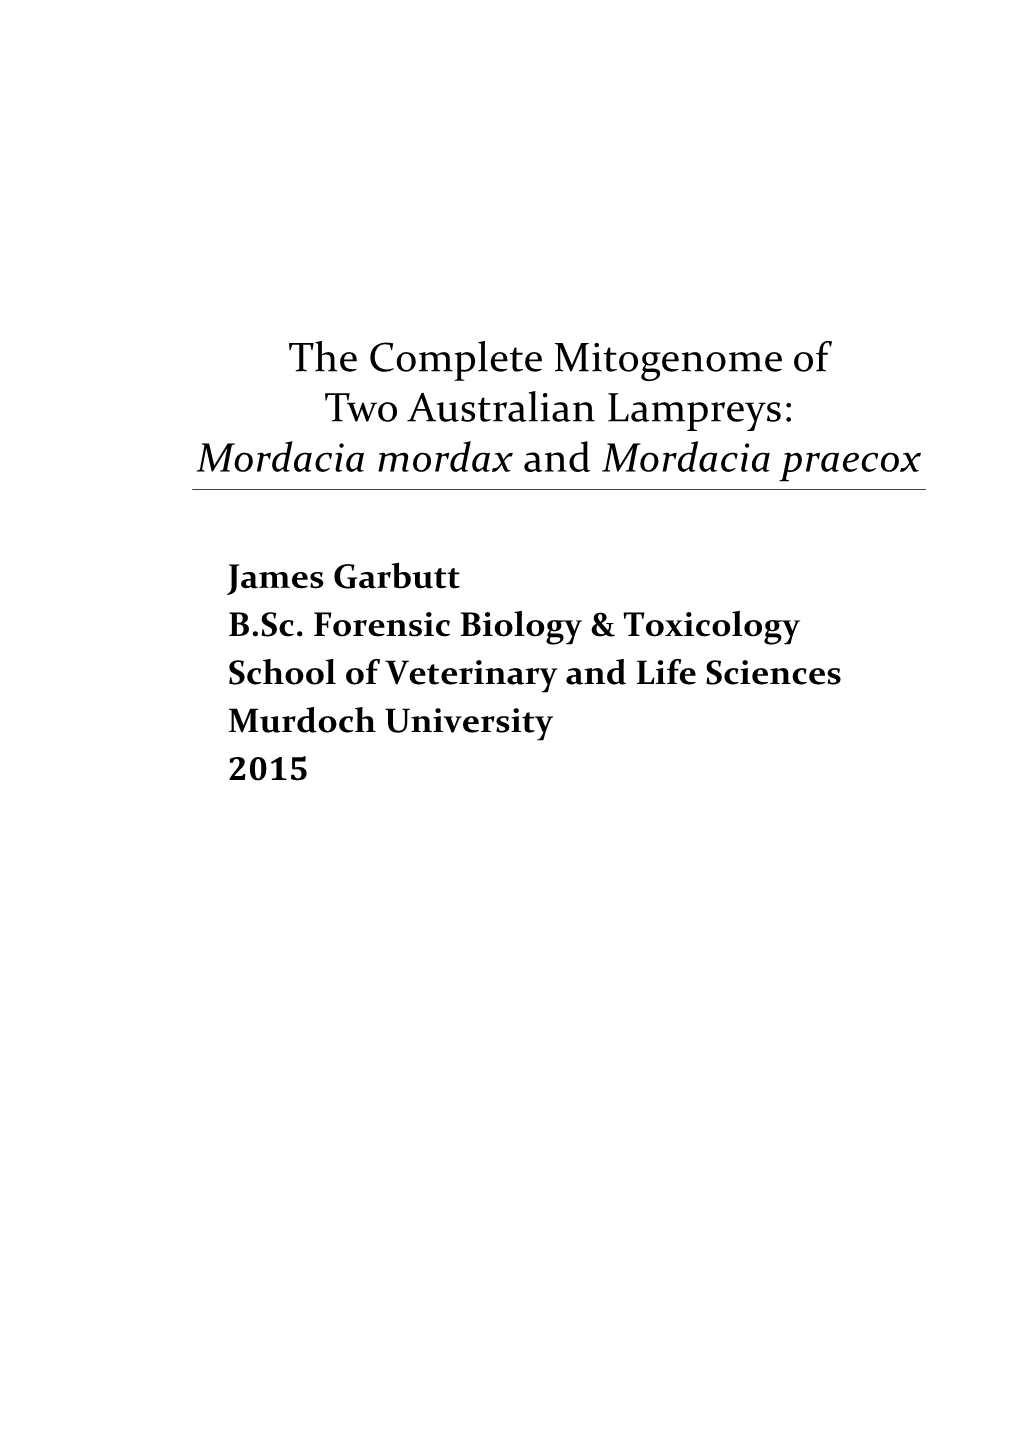 The Complete Mitogenome of Two Australian Lampreys: Mordacia Mordax and Mordacia Praecox